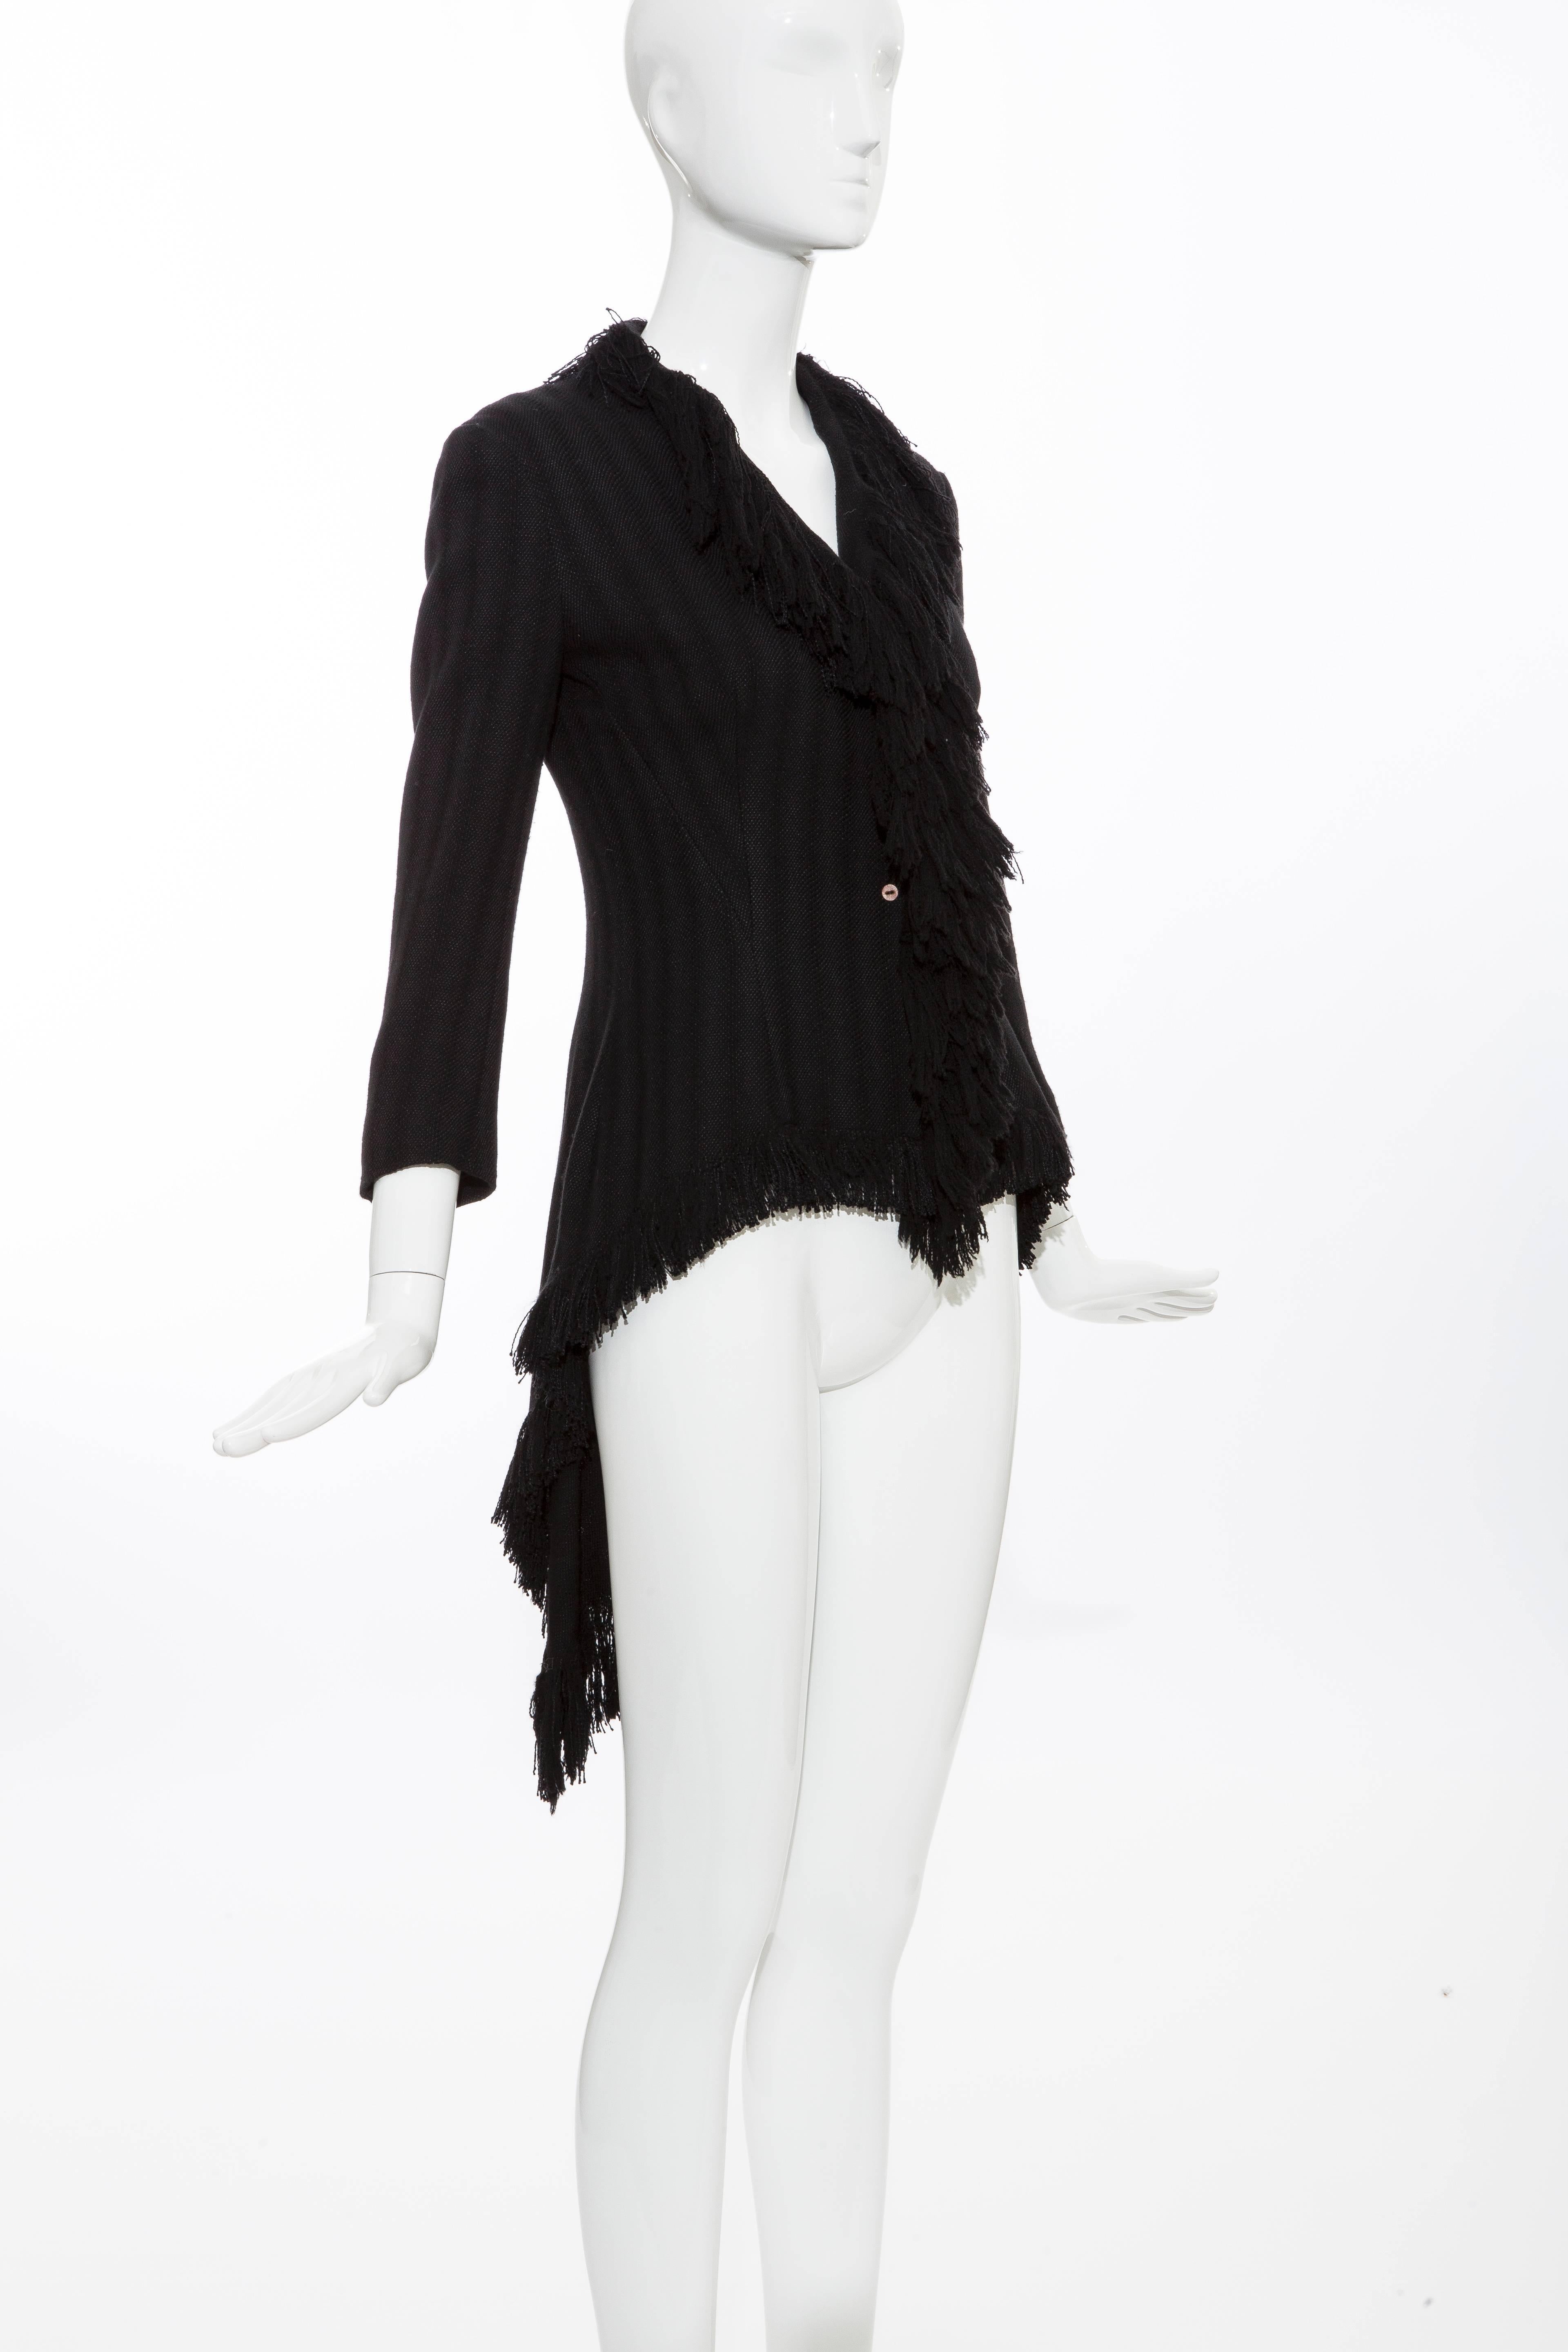 Women's Yohji Yamamoto Black Silk Wool Tweed Cutaway Jacket With Fringe Trim, Fall 2013 For Sale